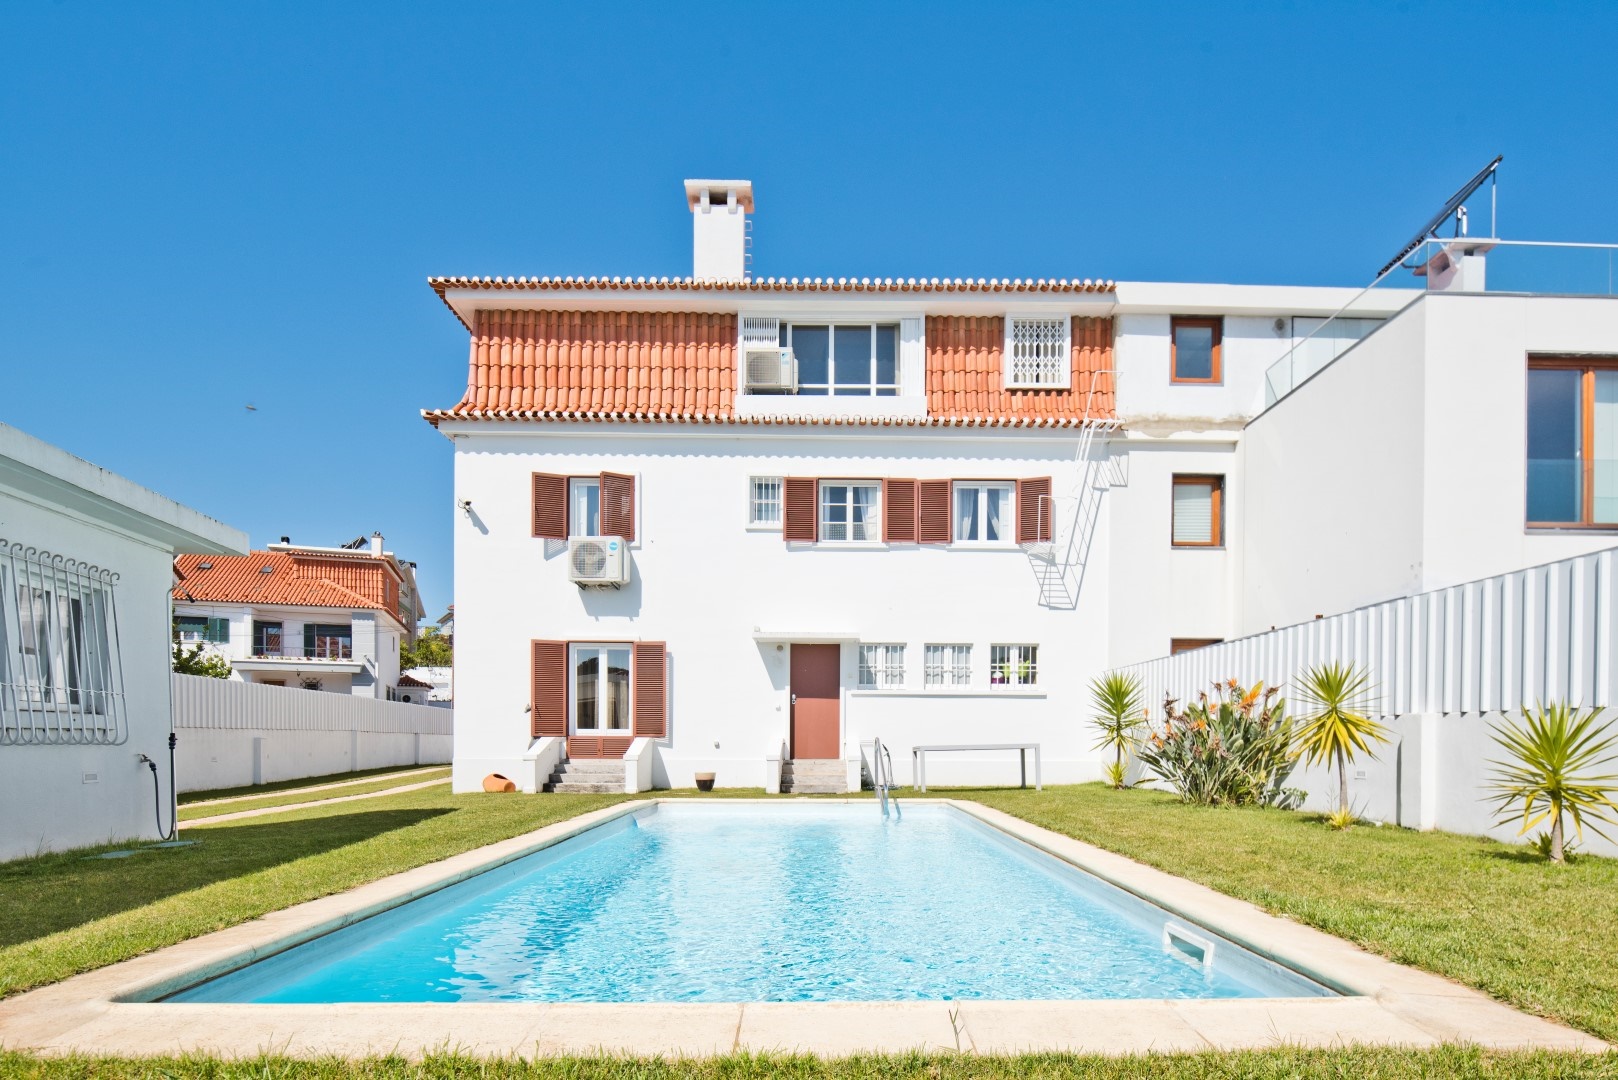 For Sale Detached Villa Alvalade Lisbon Portugal Mor3794asa017